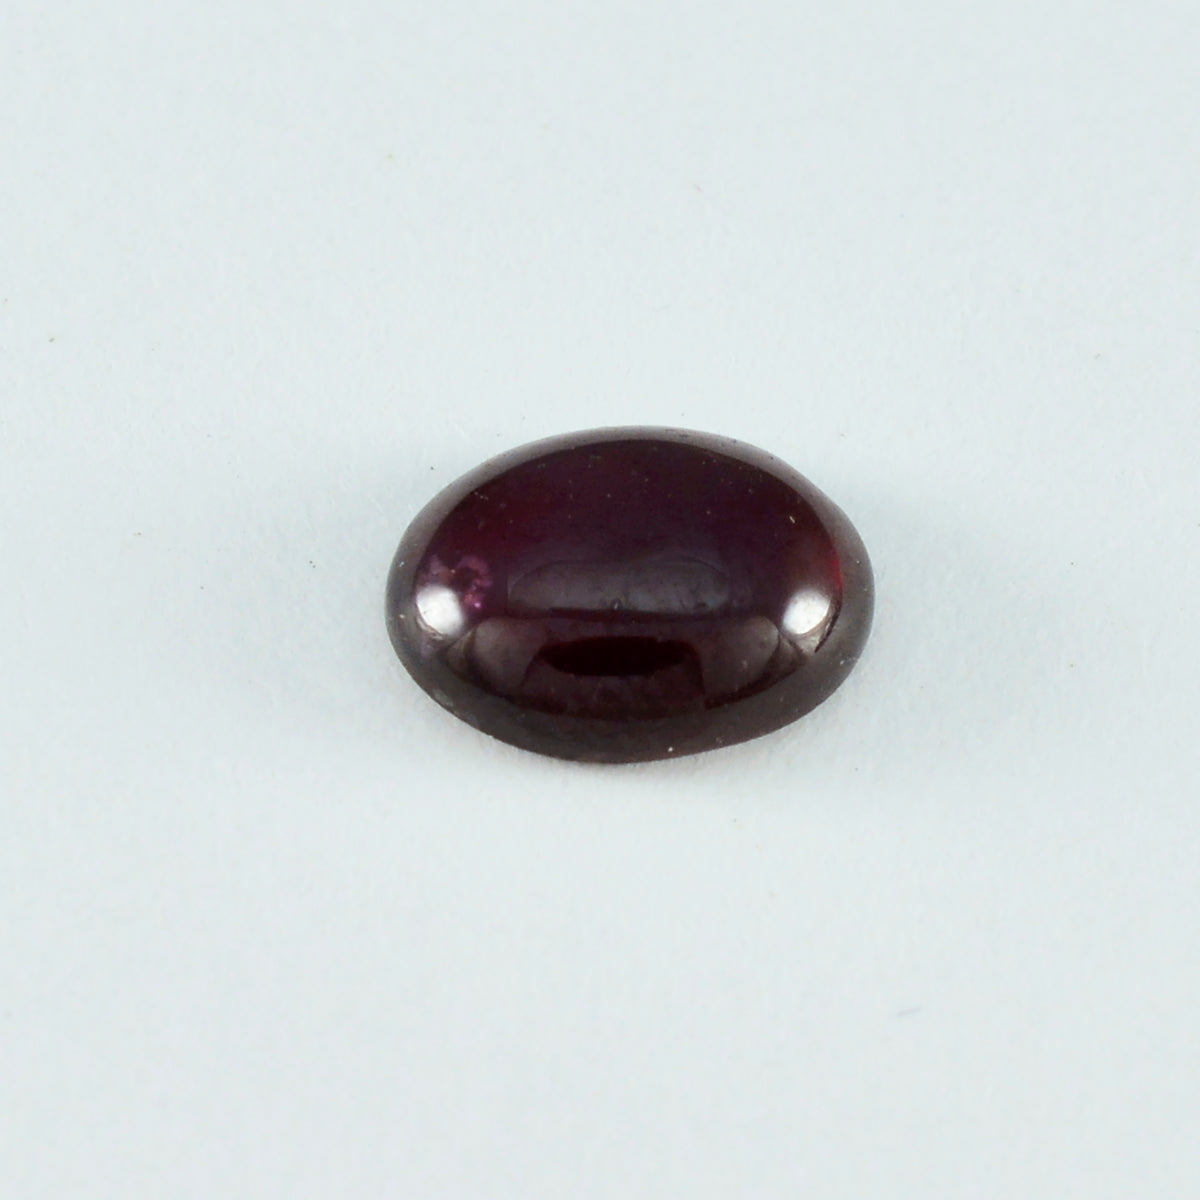 Riyogems 1PC Red Garnet Cabochon 10x14 mm Oval Shape astonishing Quality Gemstone